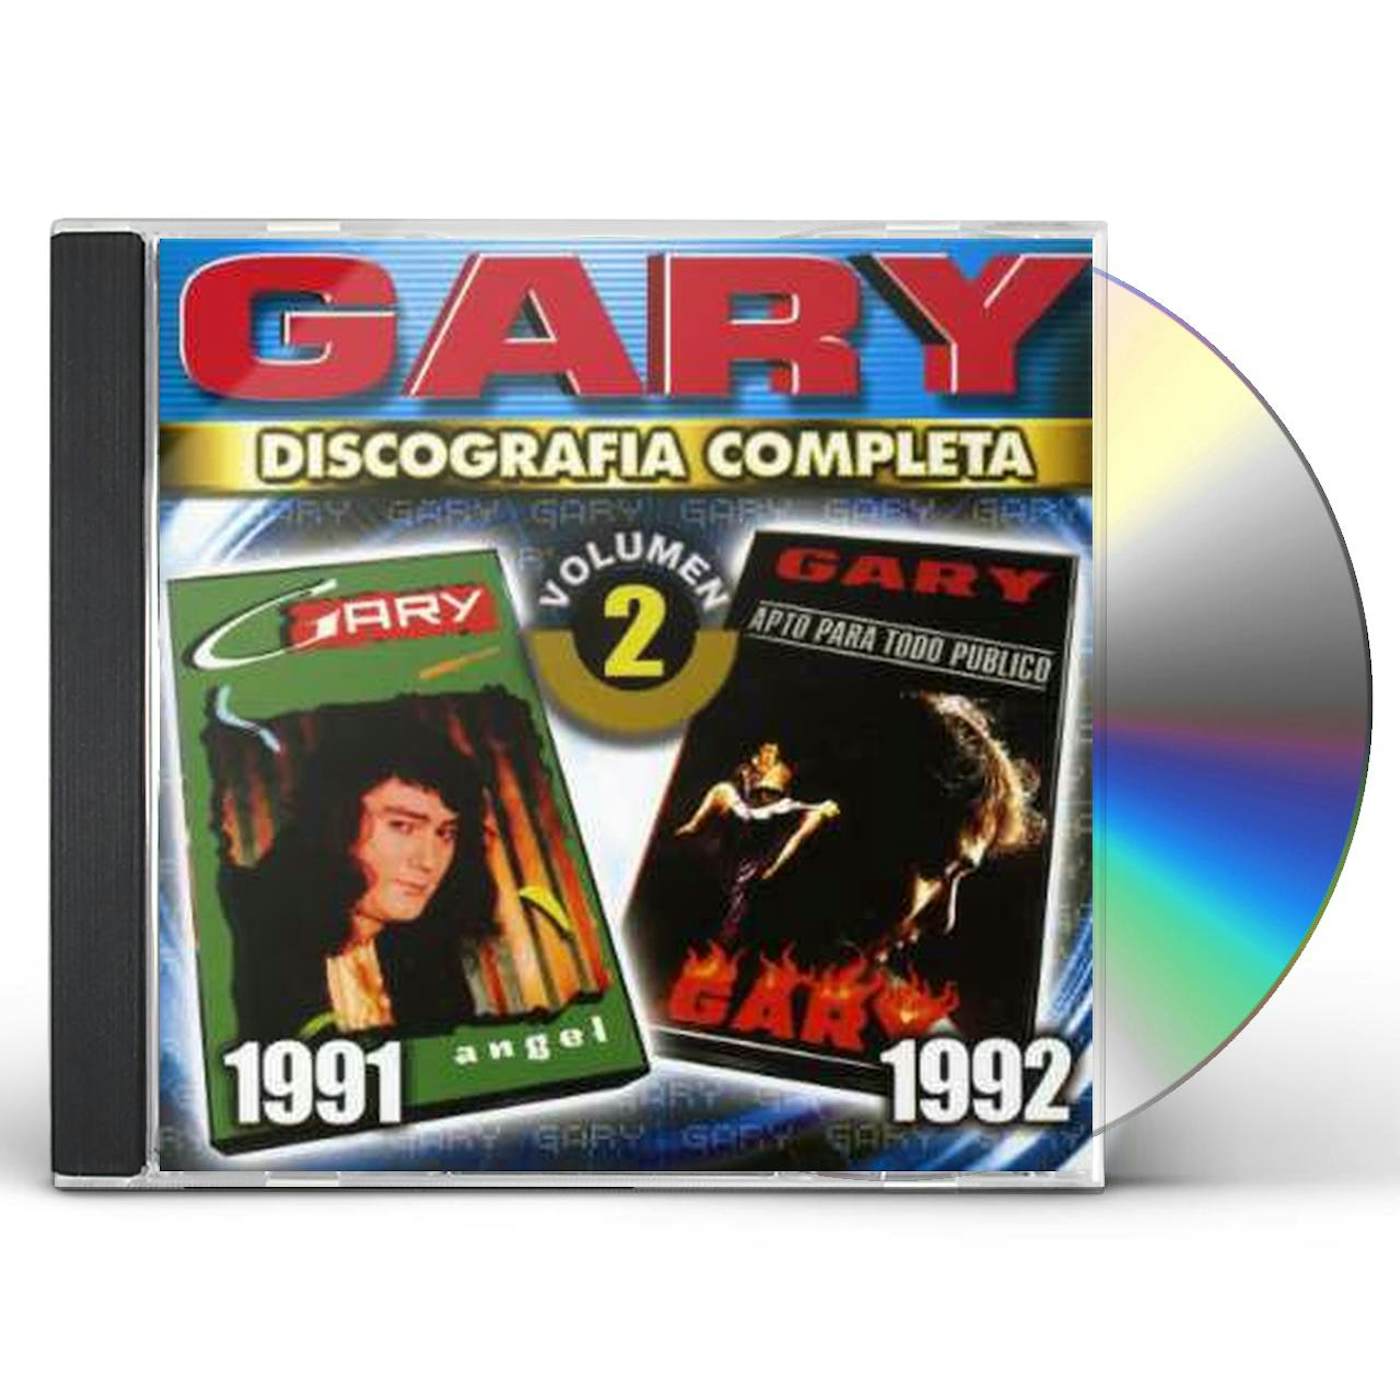 GARY DISCOGRAFIA COMPLETA 2 CD